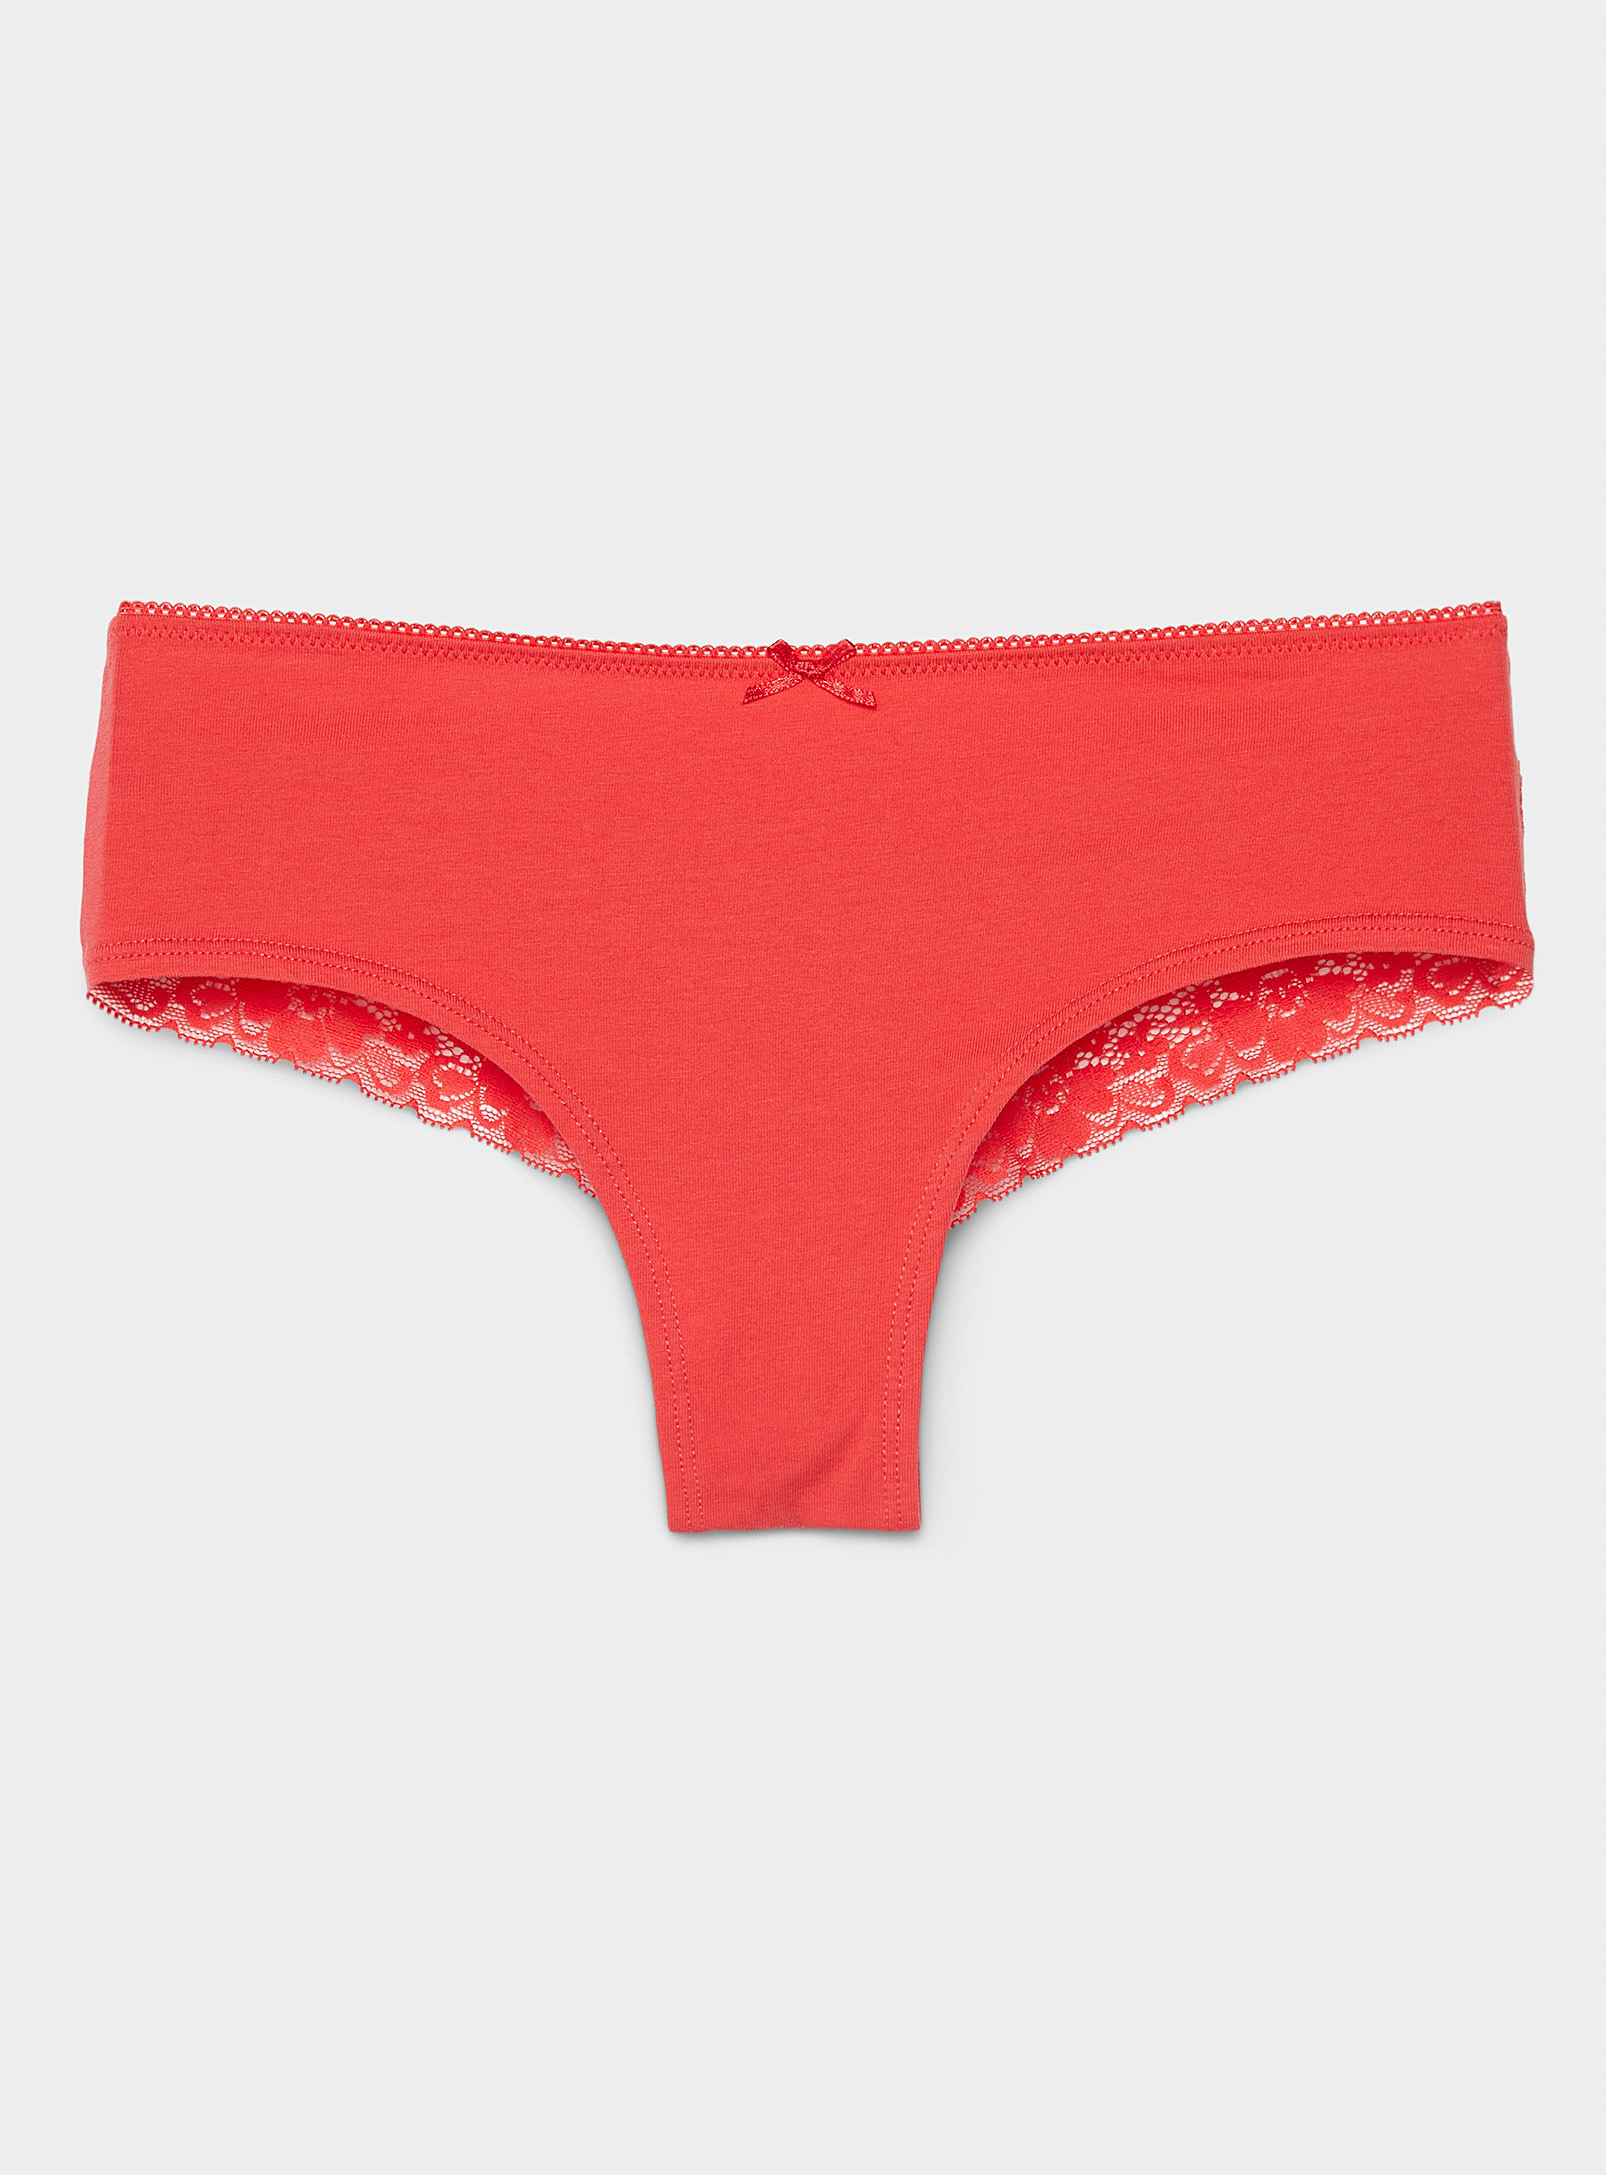 Miiyu Lace Band Oraganic Cotton Brazilian Panty In Bright Red